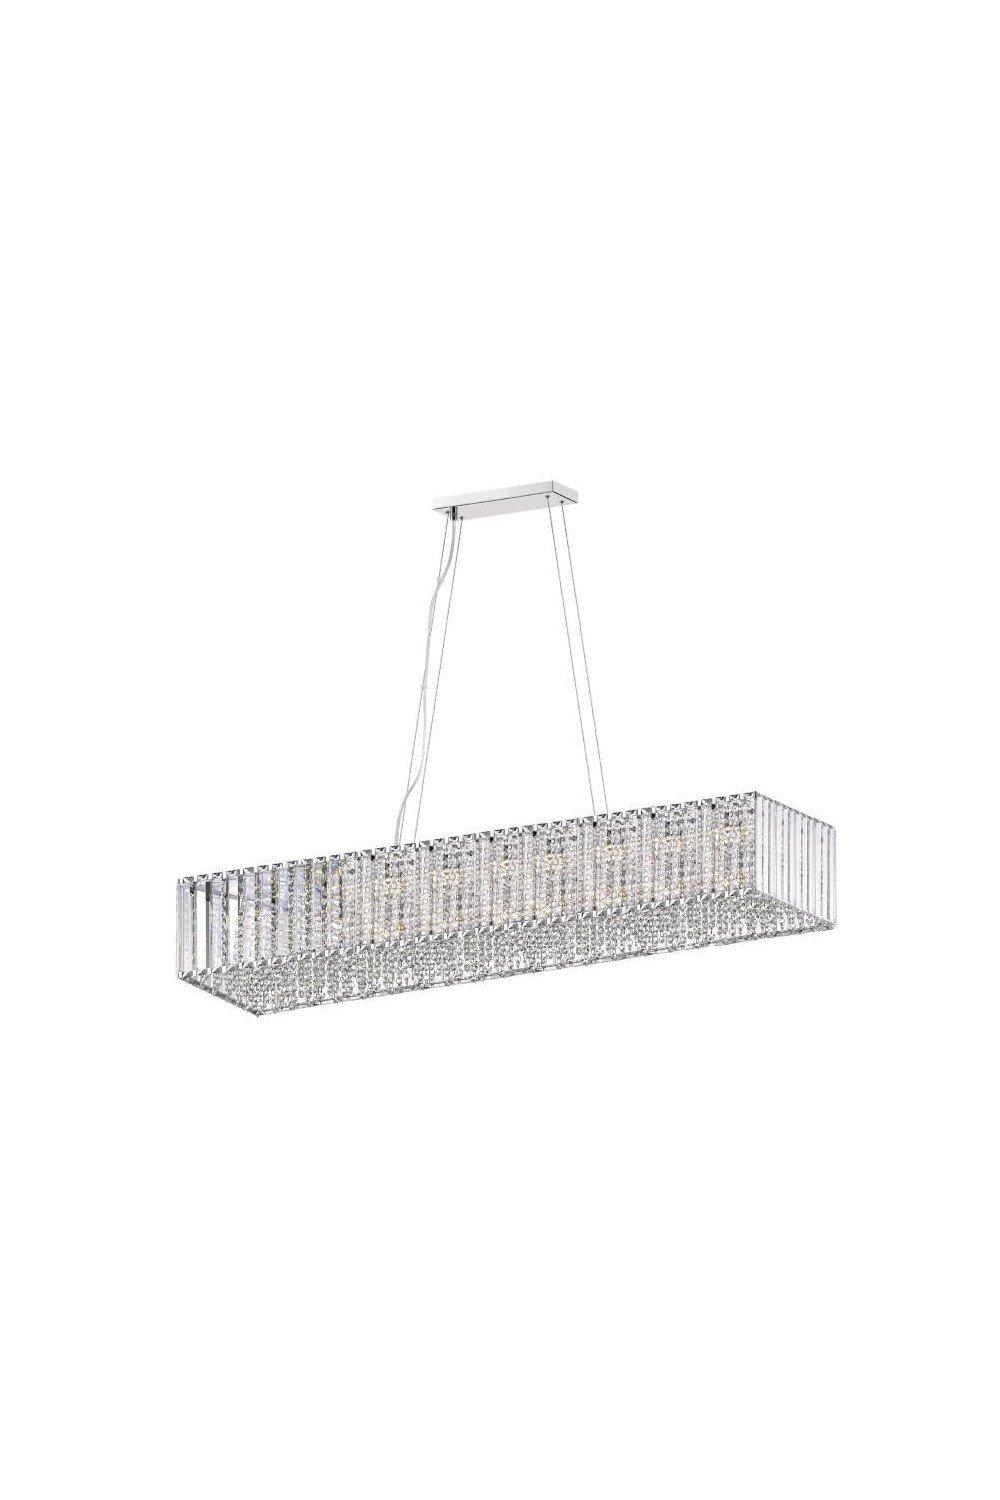 Diore 11 Light Oblong Chrome Crystal Bar Pendant Ceiling Light